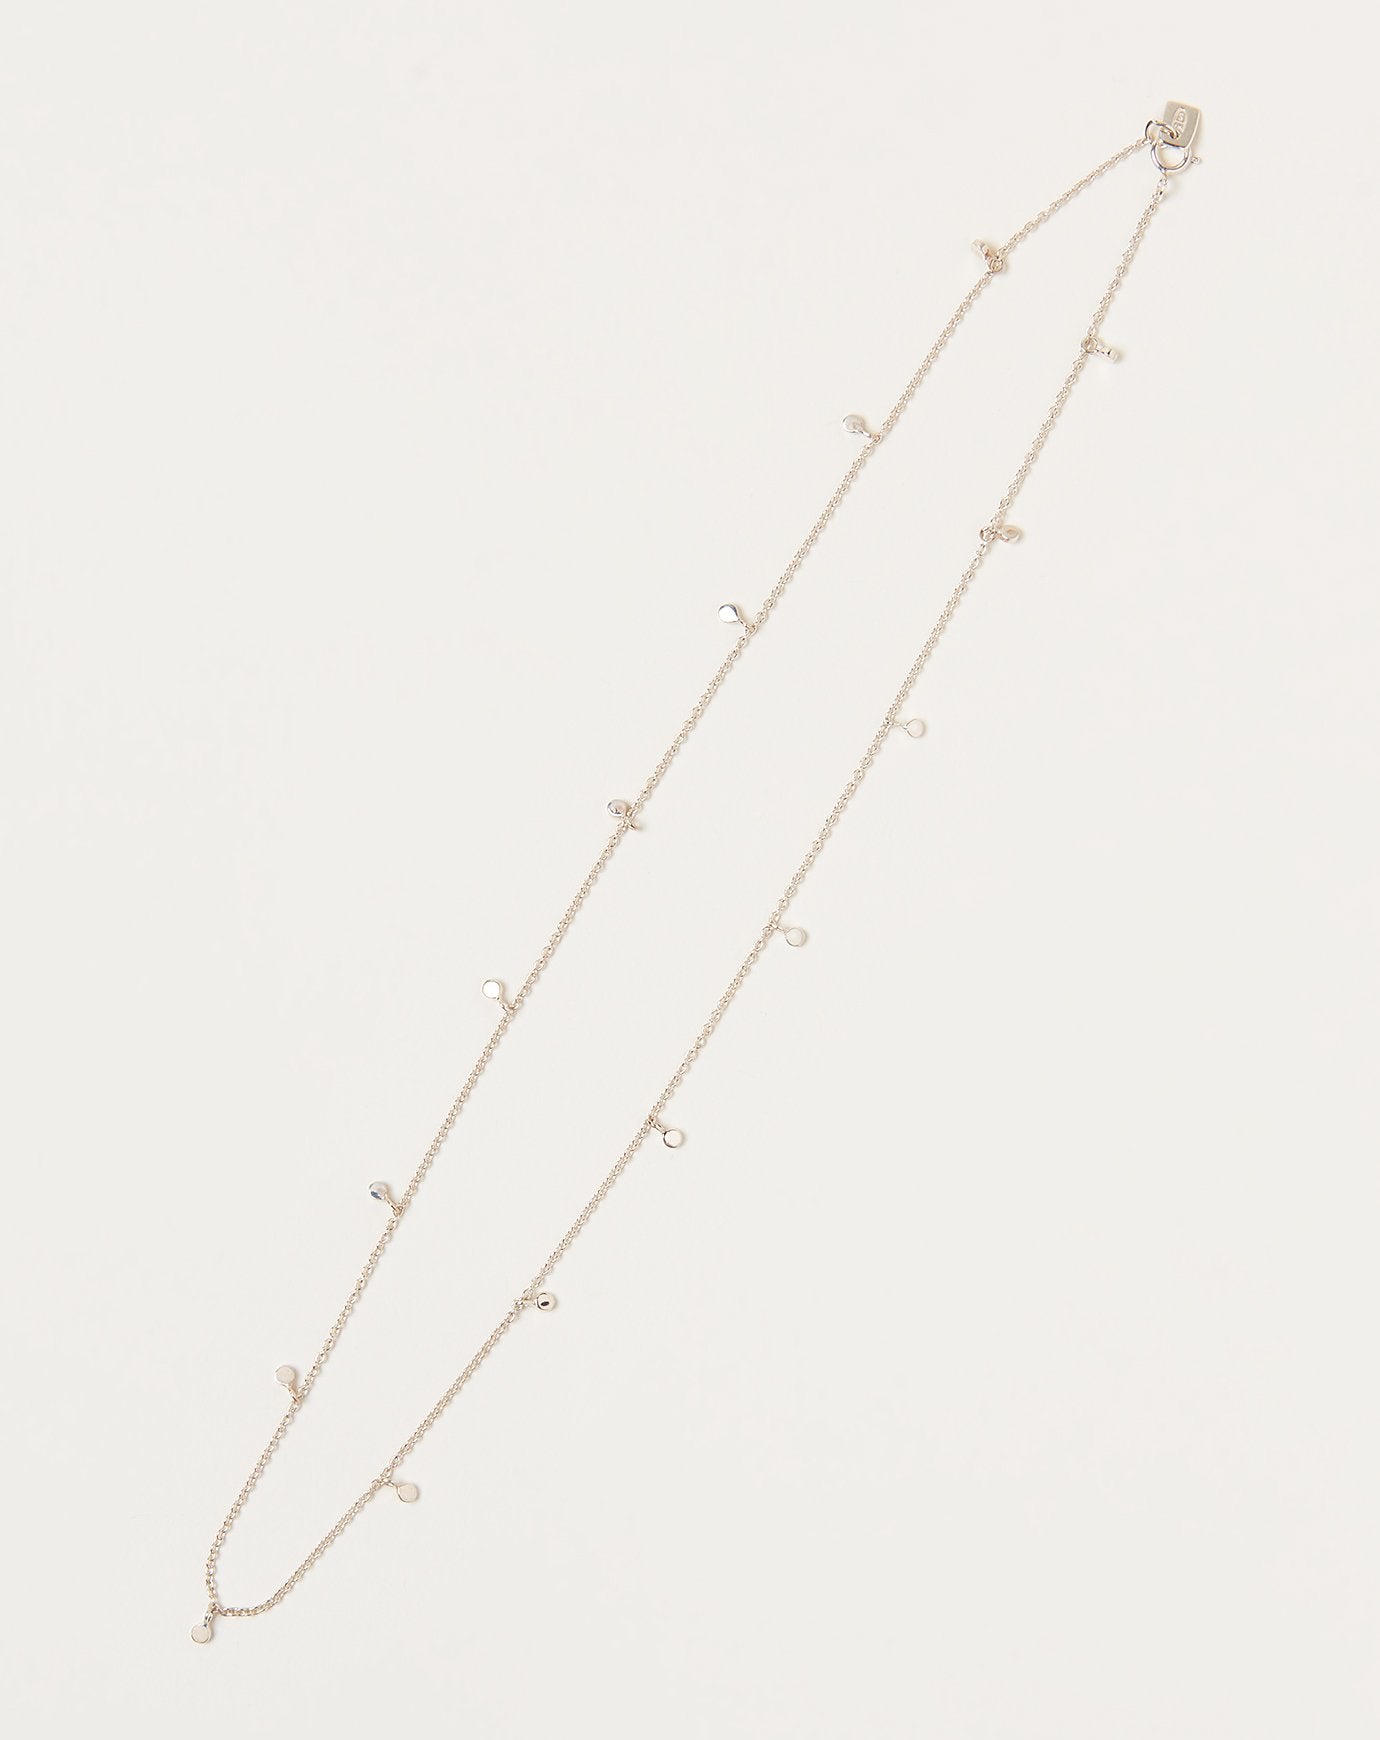 Scosha Fairy Bead Necklace in Sterling Silver